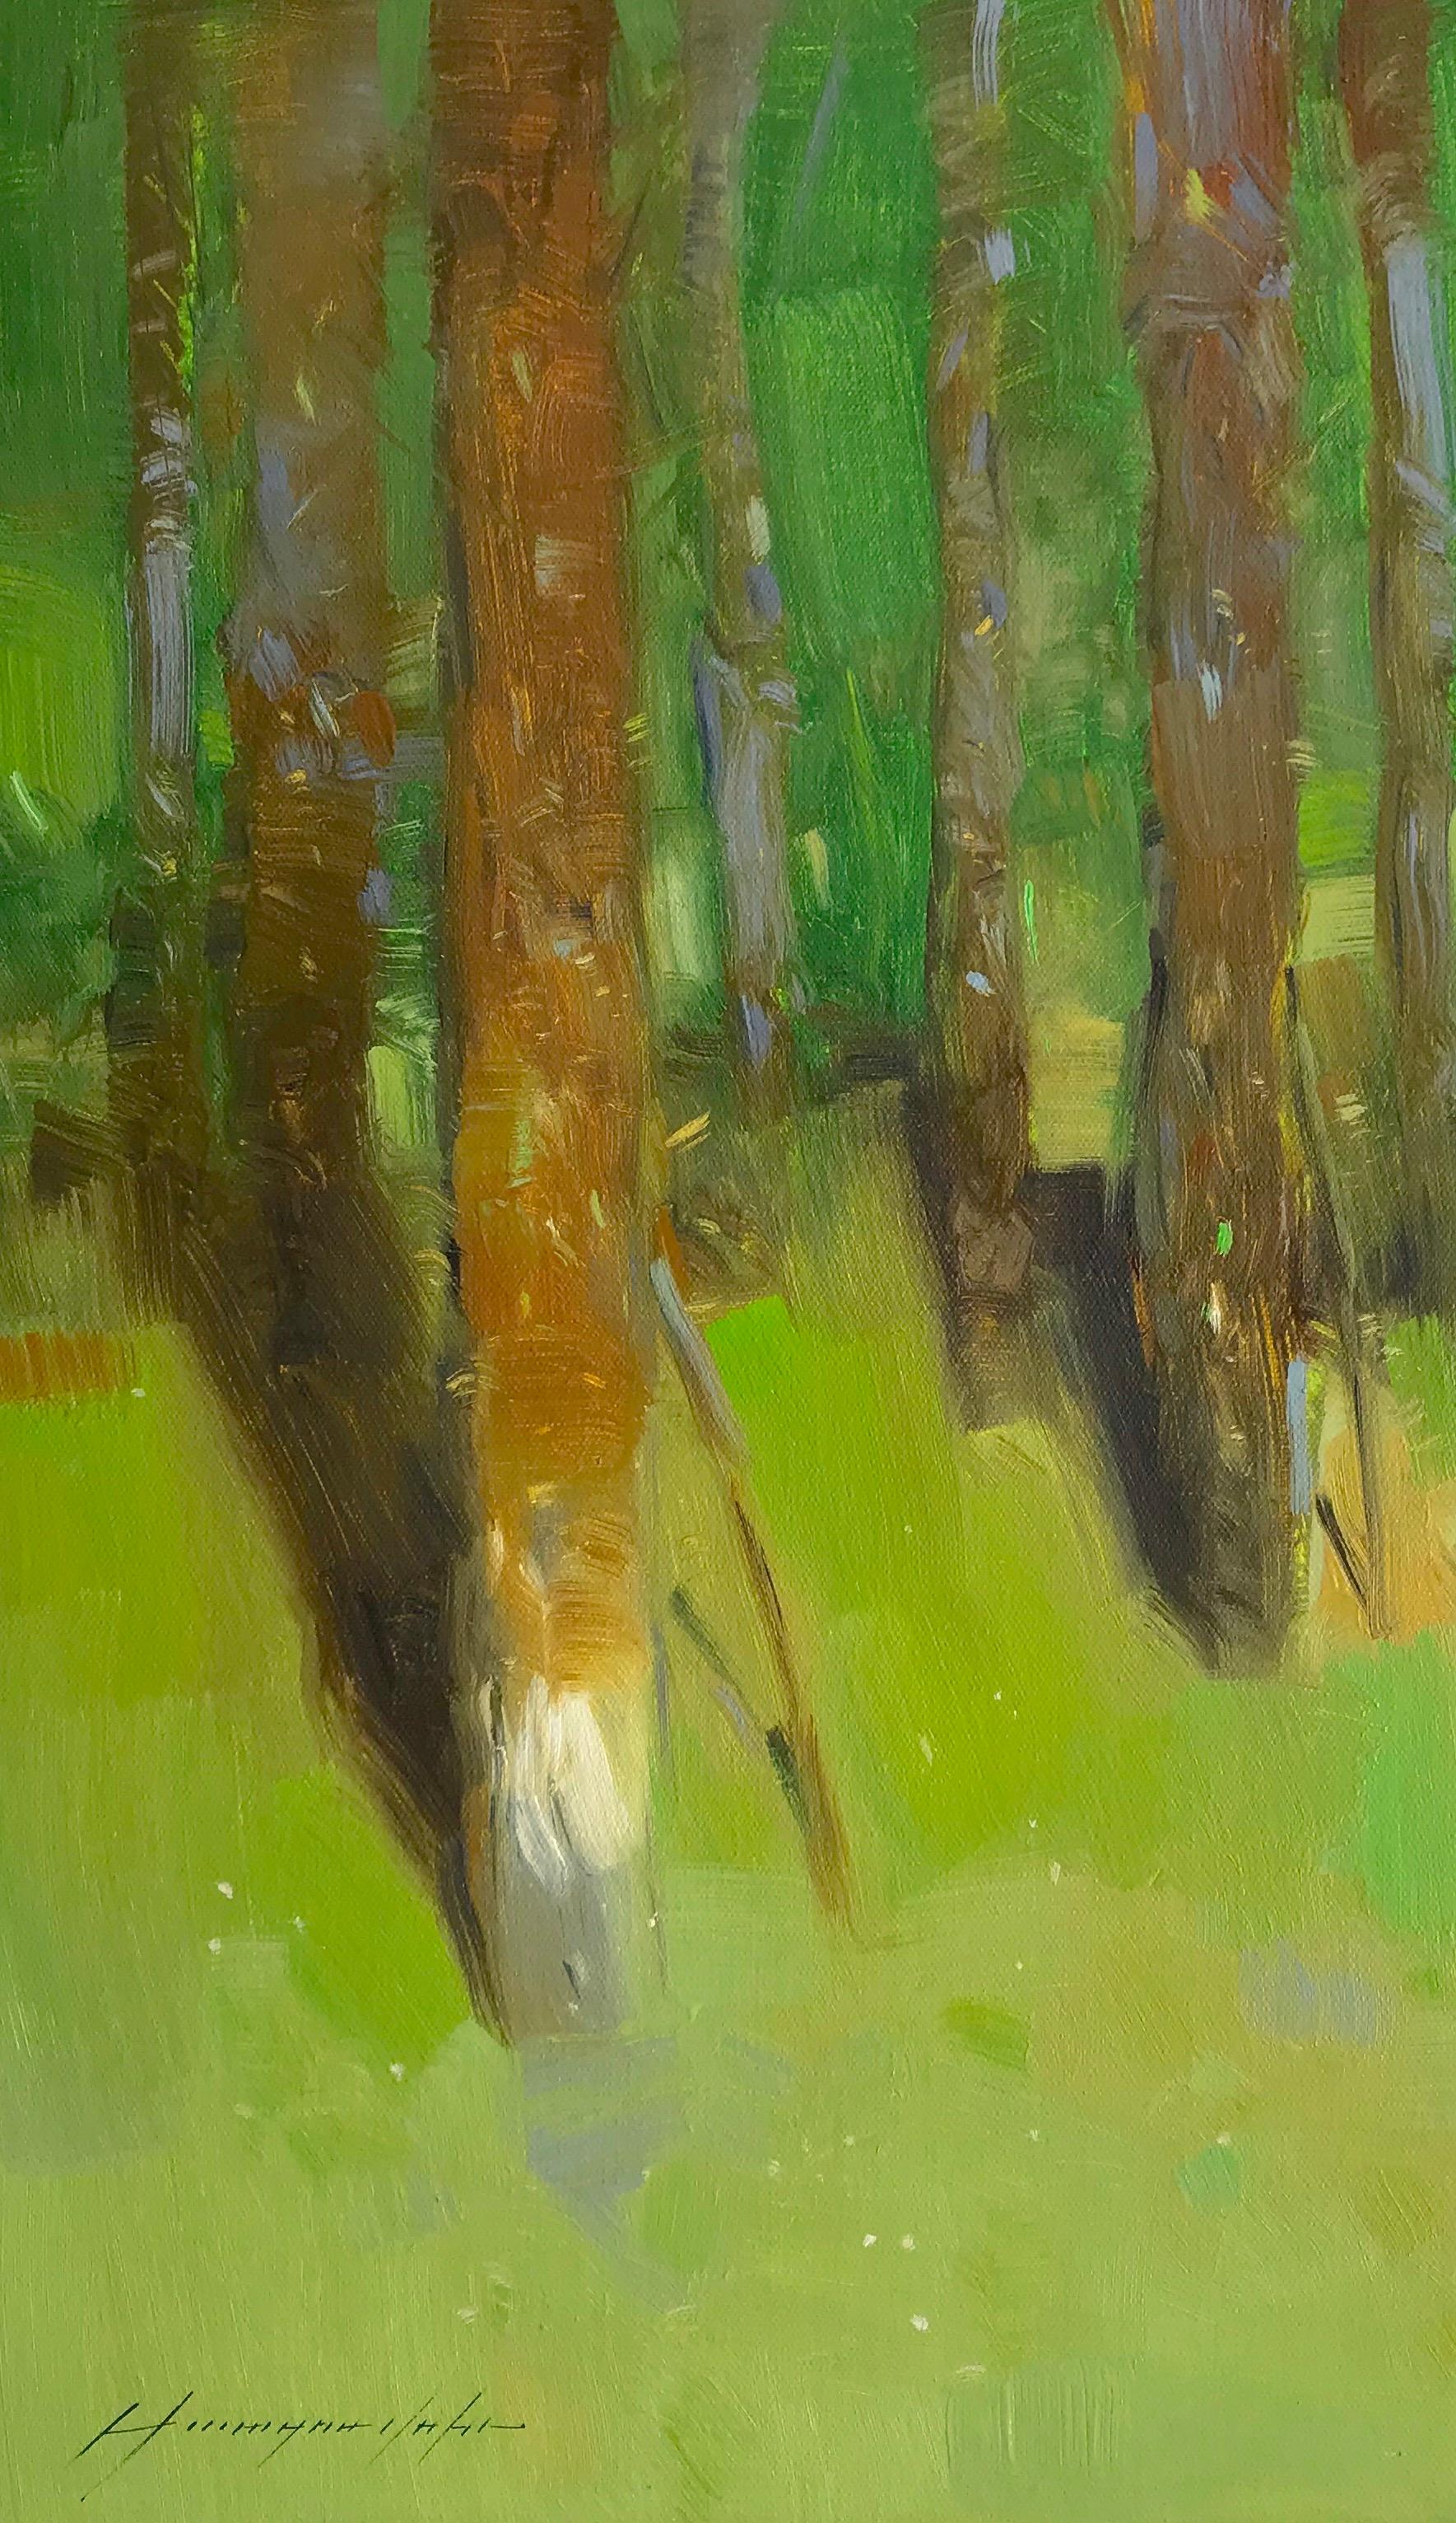 Vibrant Forest, Landscape Original Oil Painting, Handmade Artwork